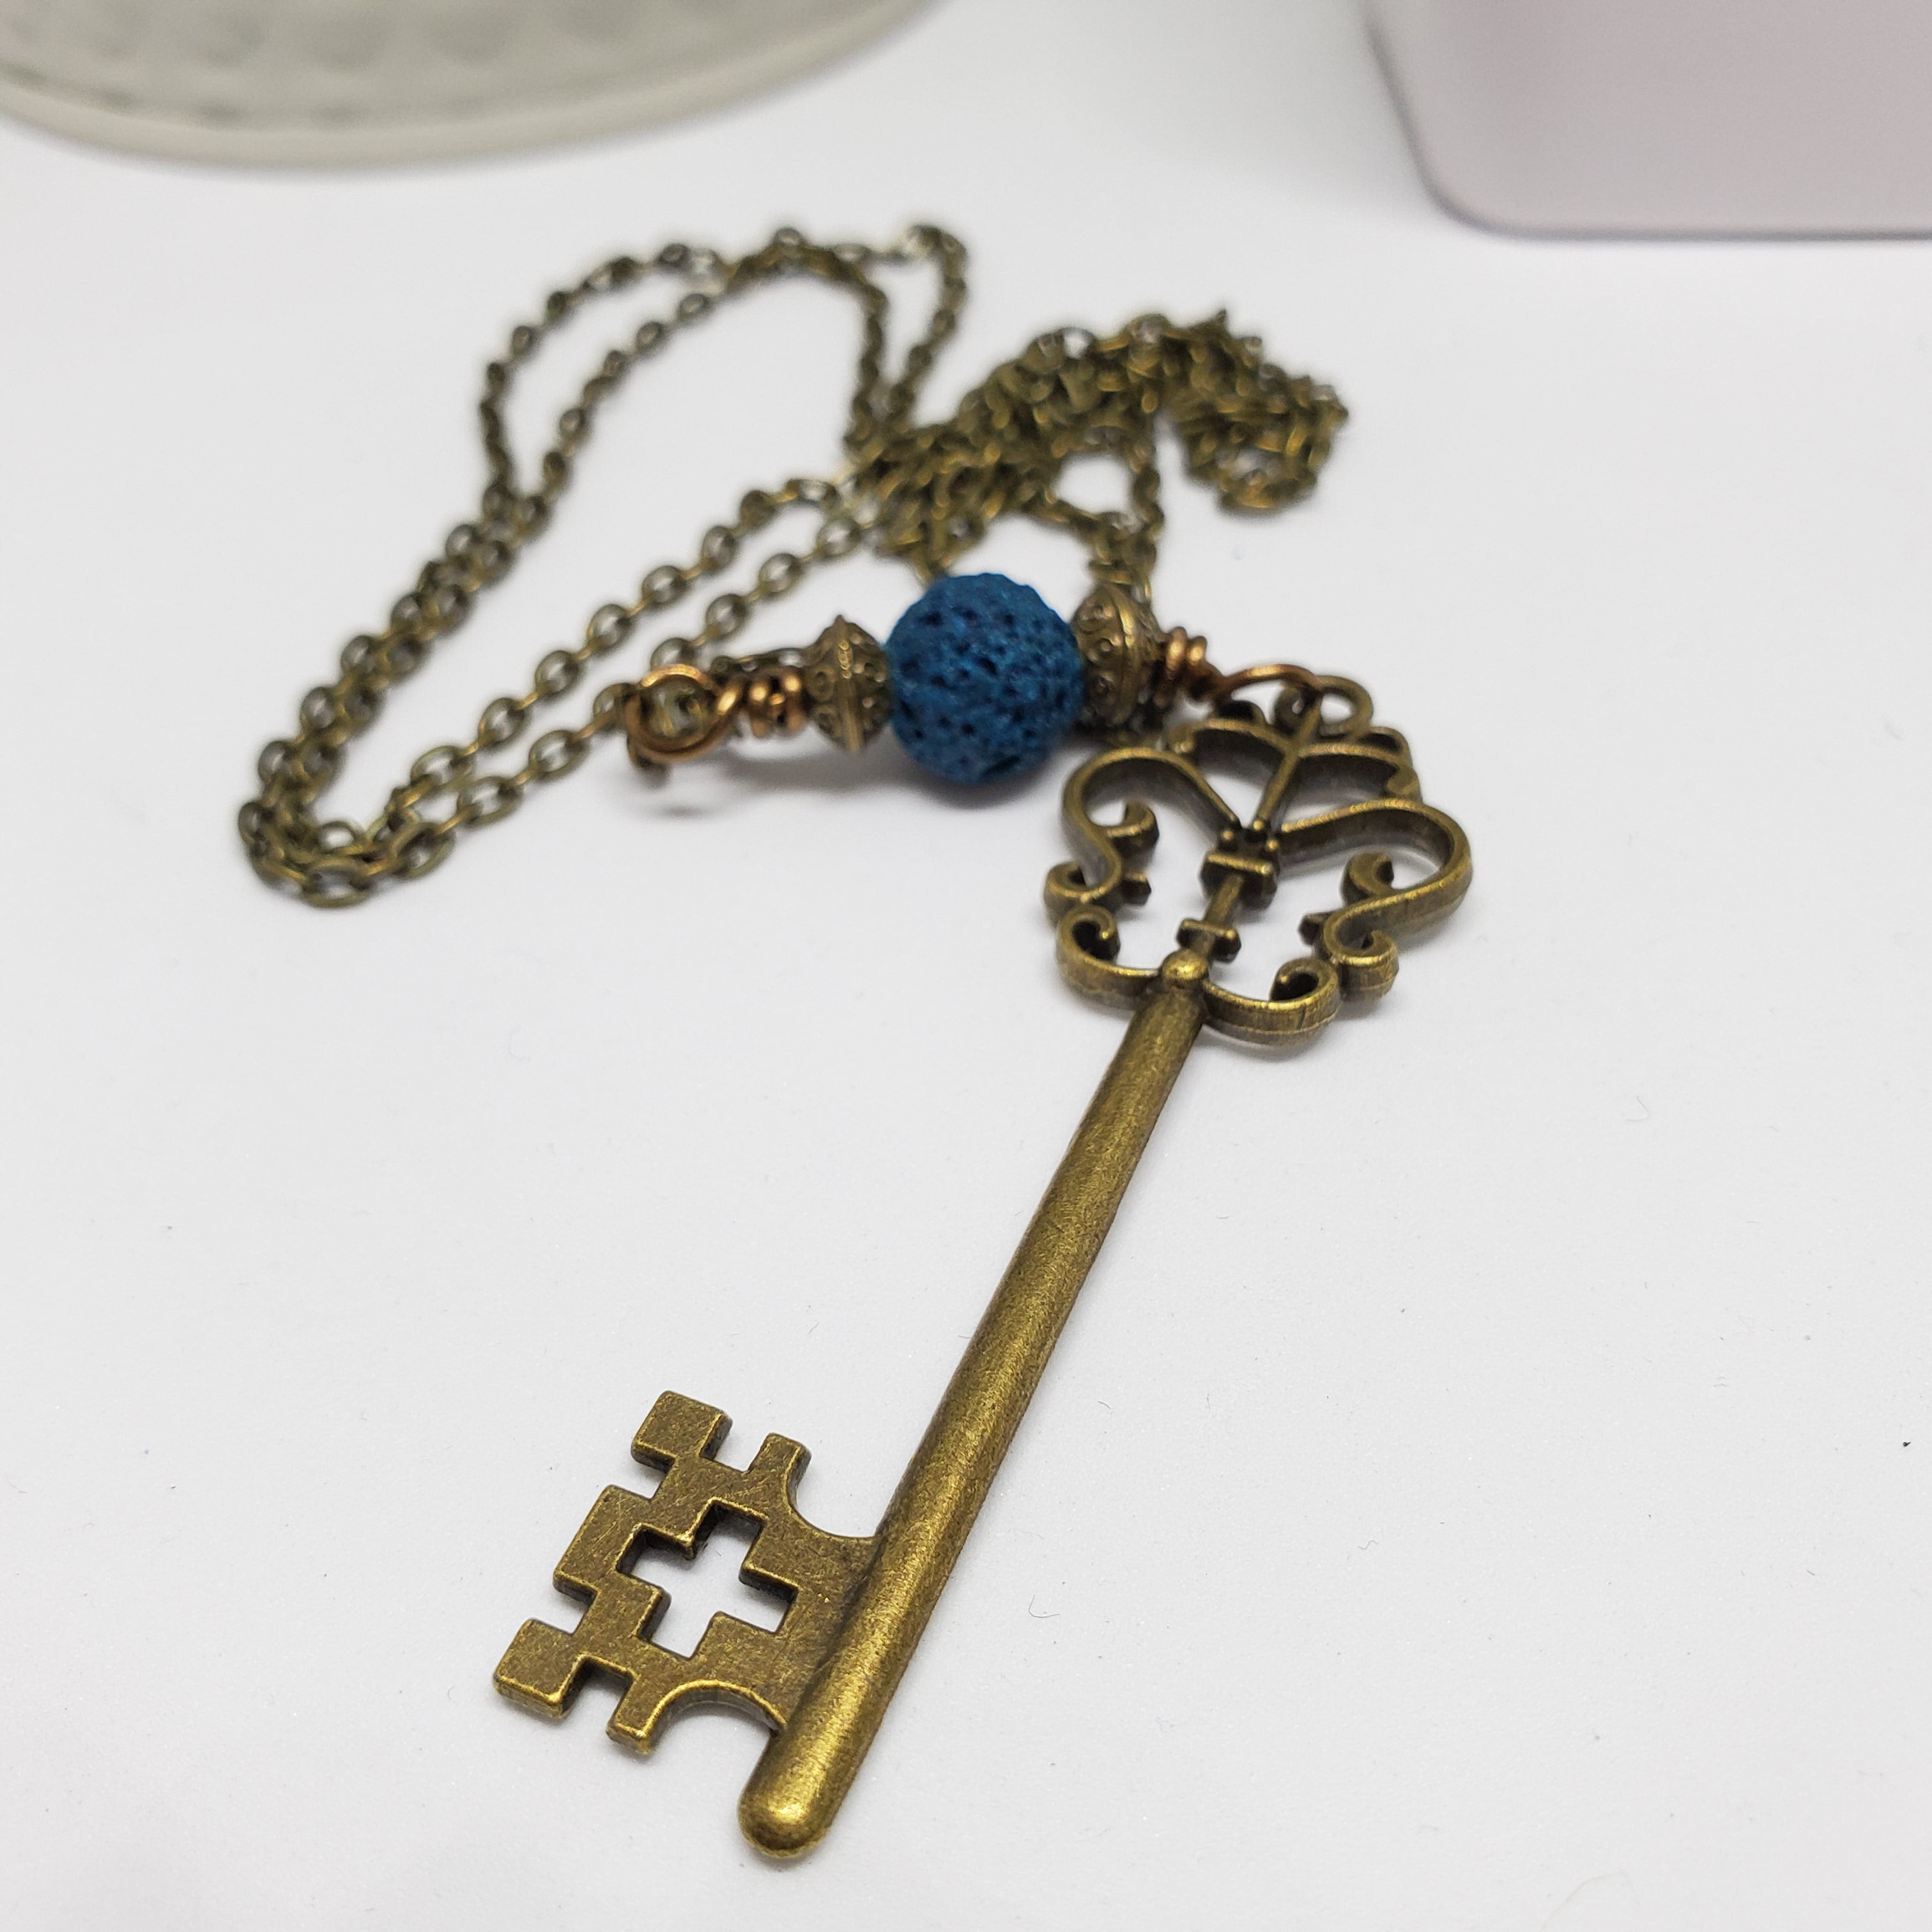 Antique Bronze Key and Blue Lava Bead